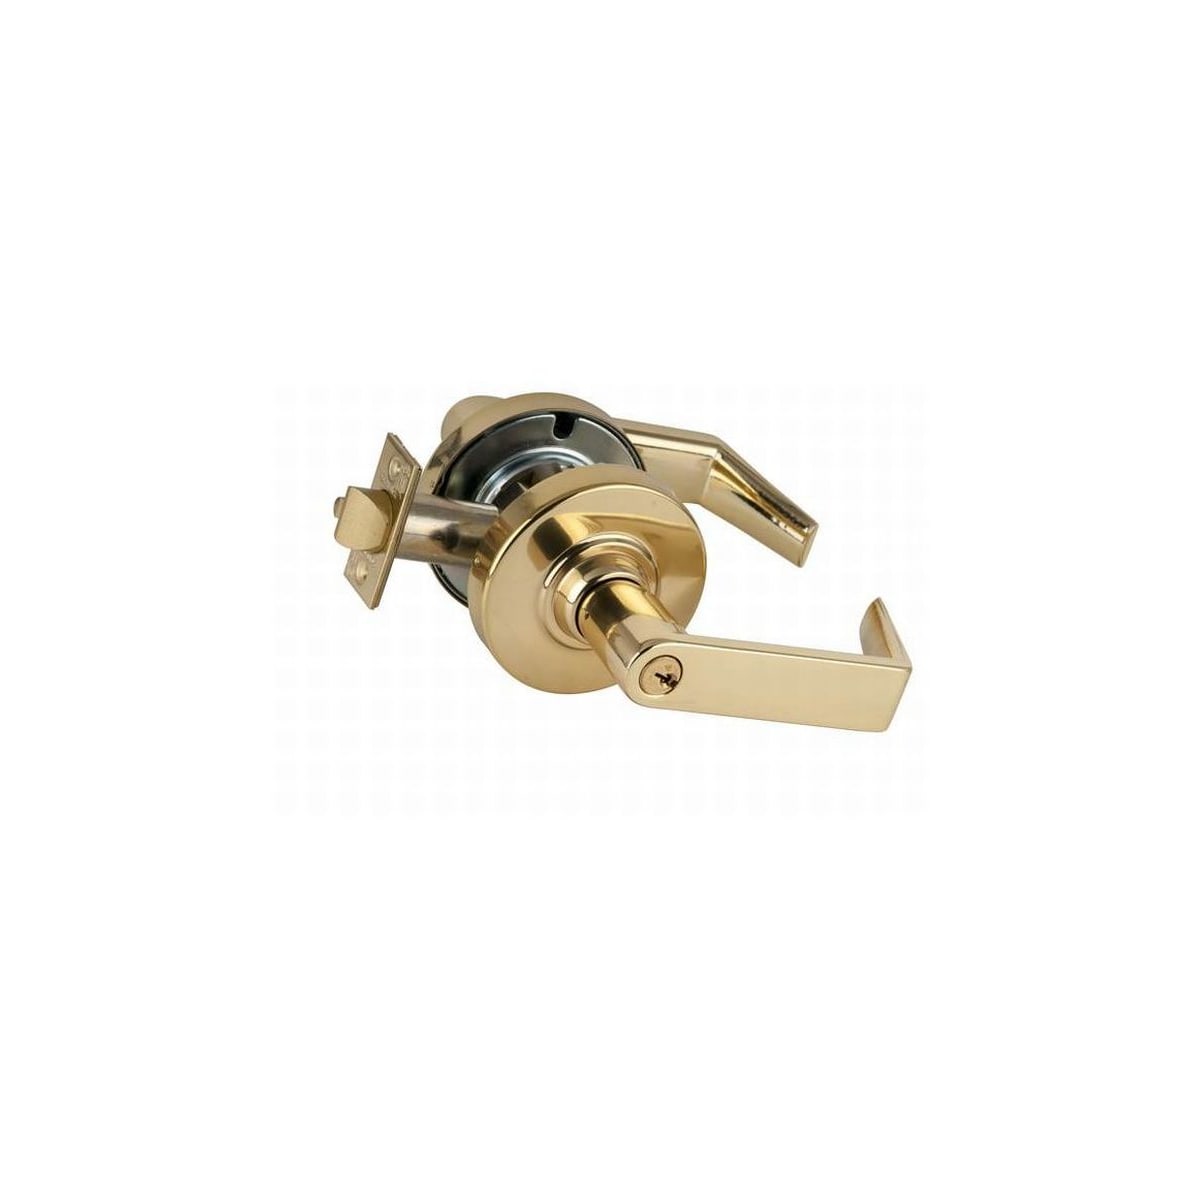 Schlage ND95PD RHO 605 KD Vandlegard Classroom Security Door Lock Polished Brass 